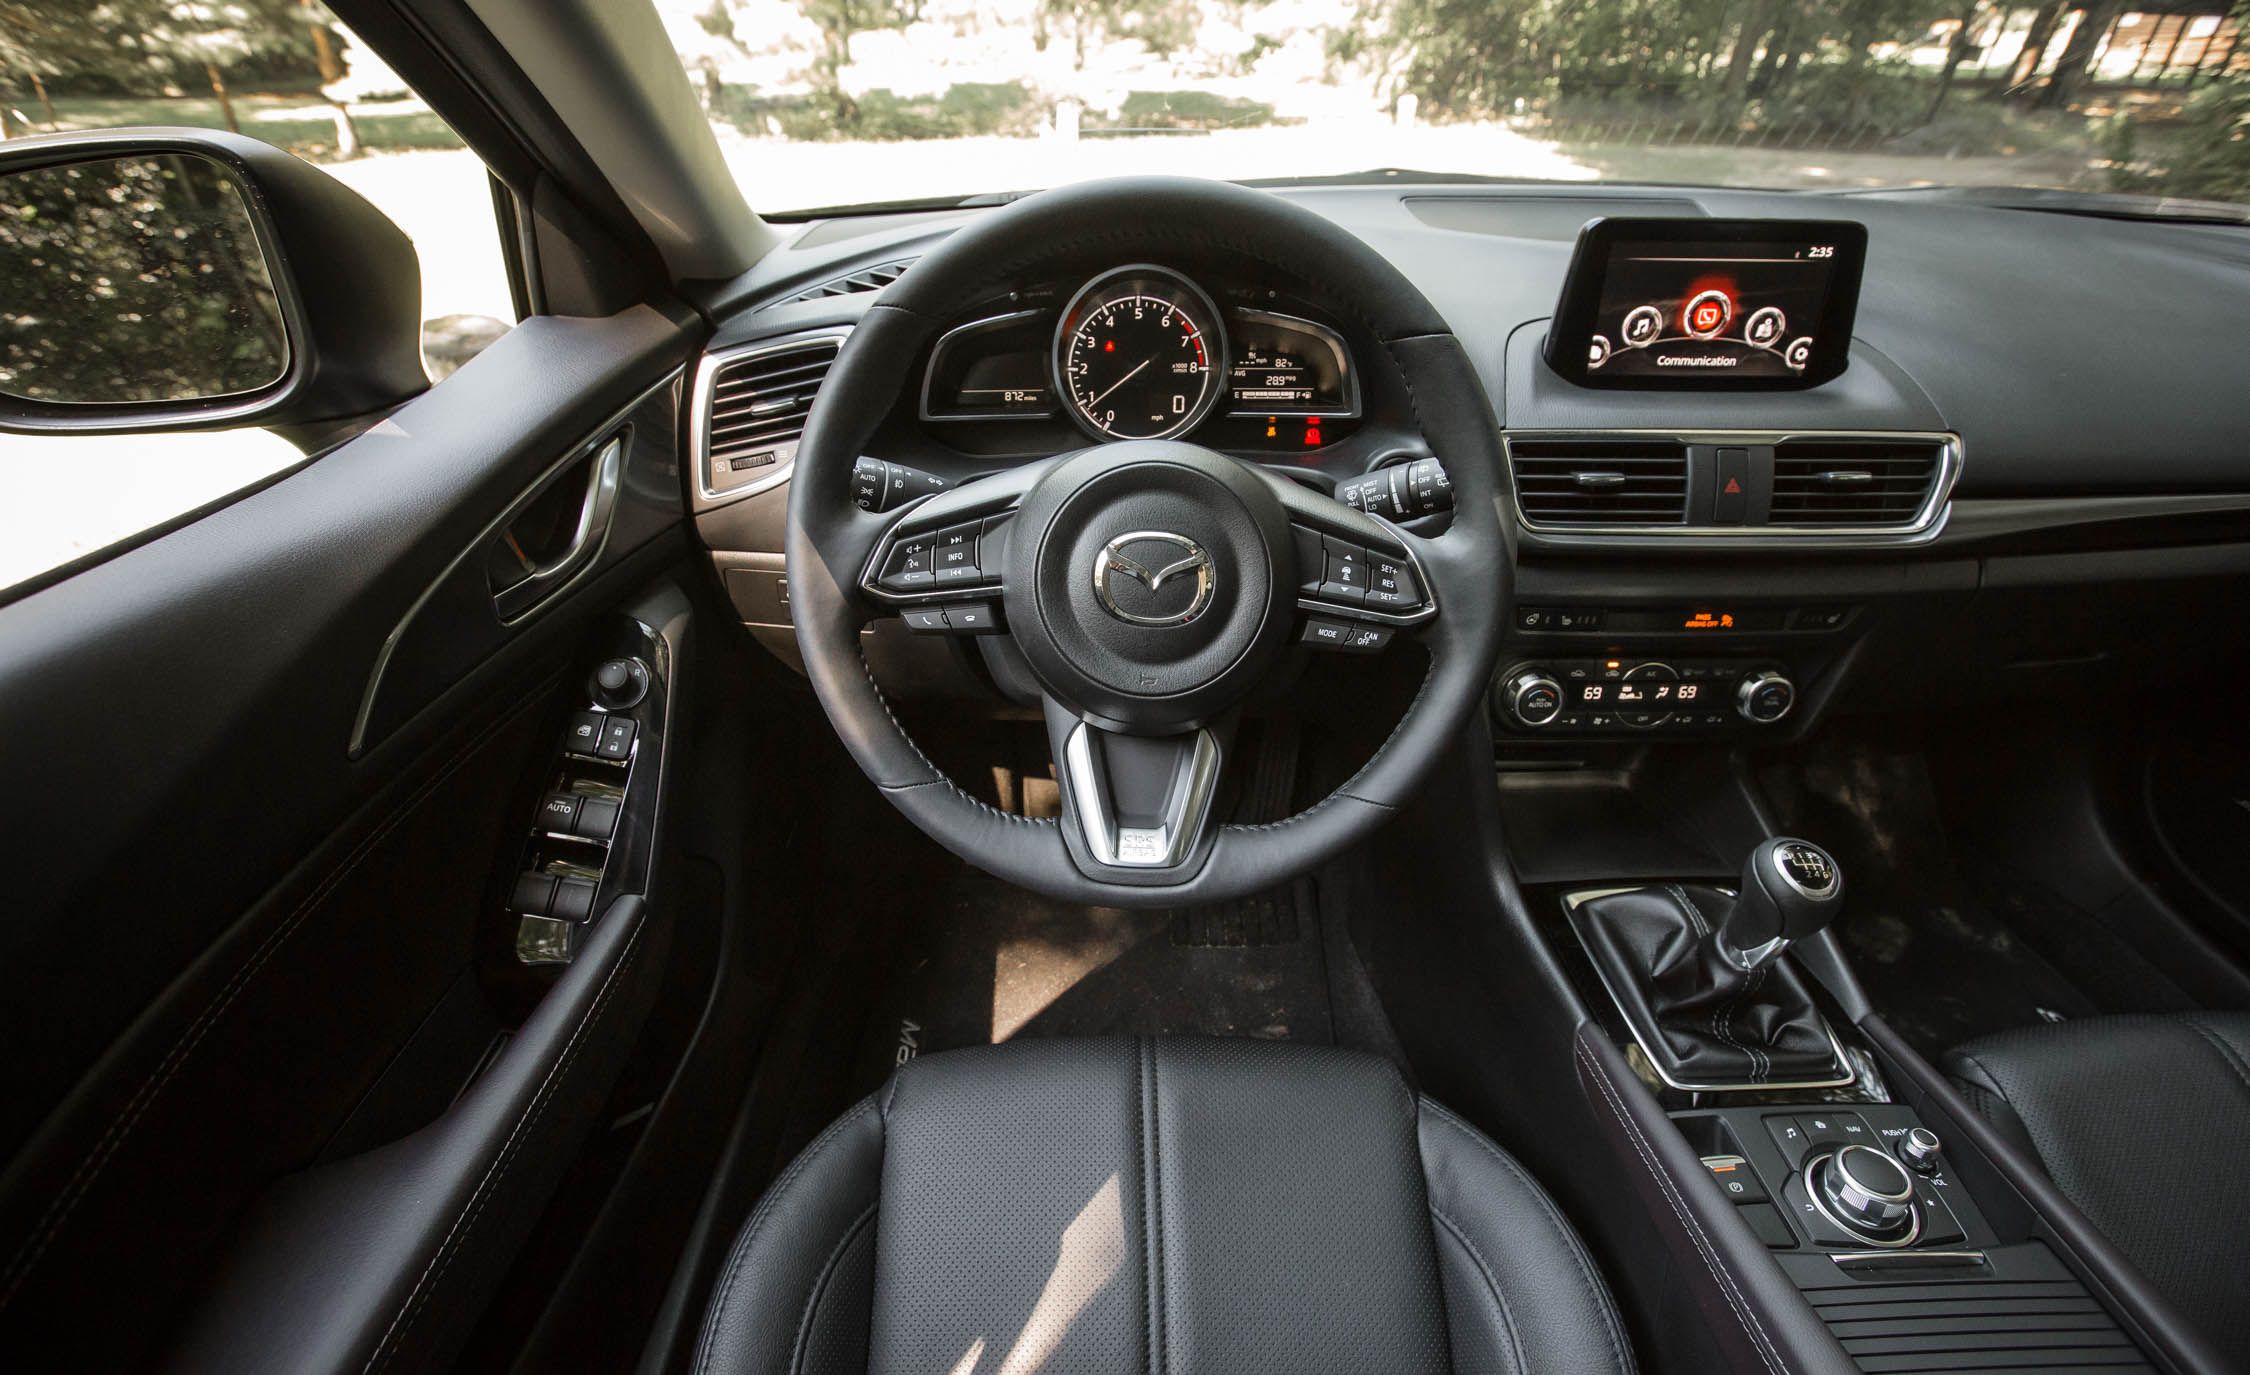 2017 Mazda3 Hatchback Interior Steering And Dash (View 31 of 40)